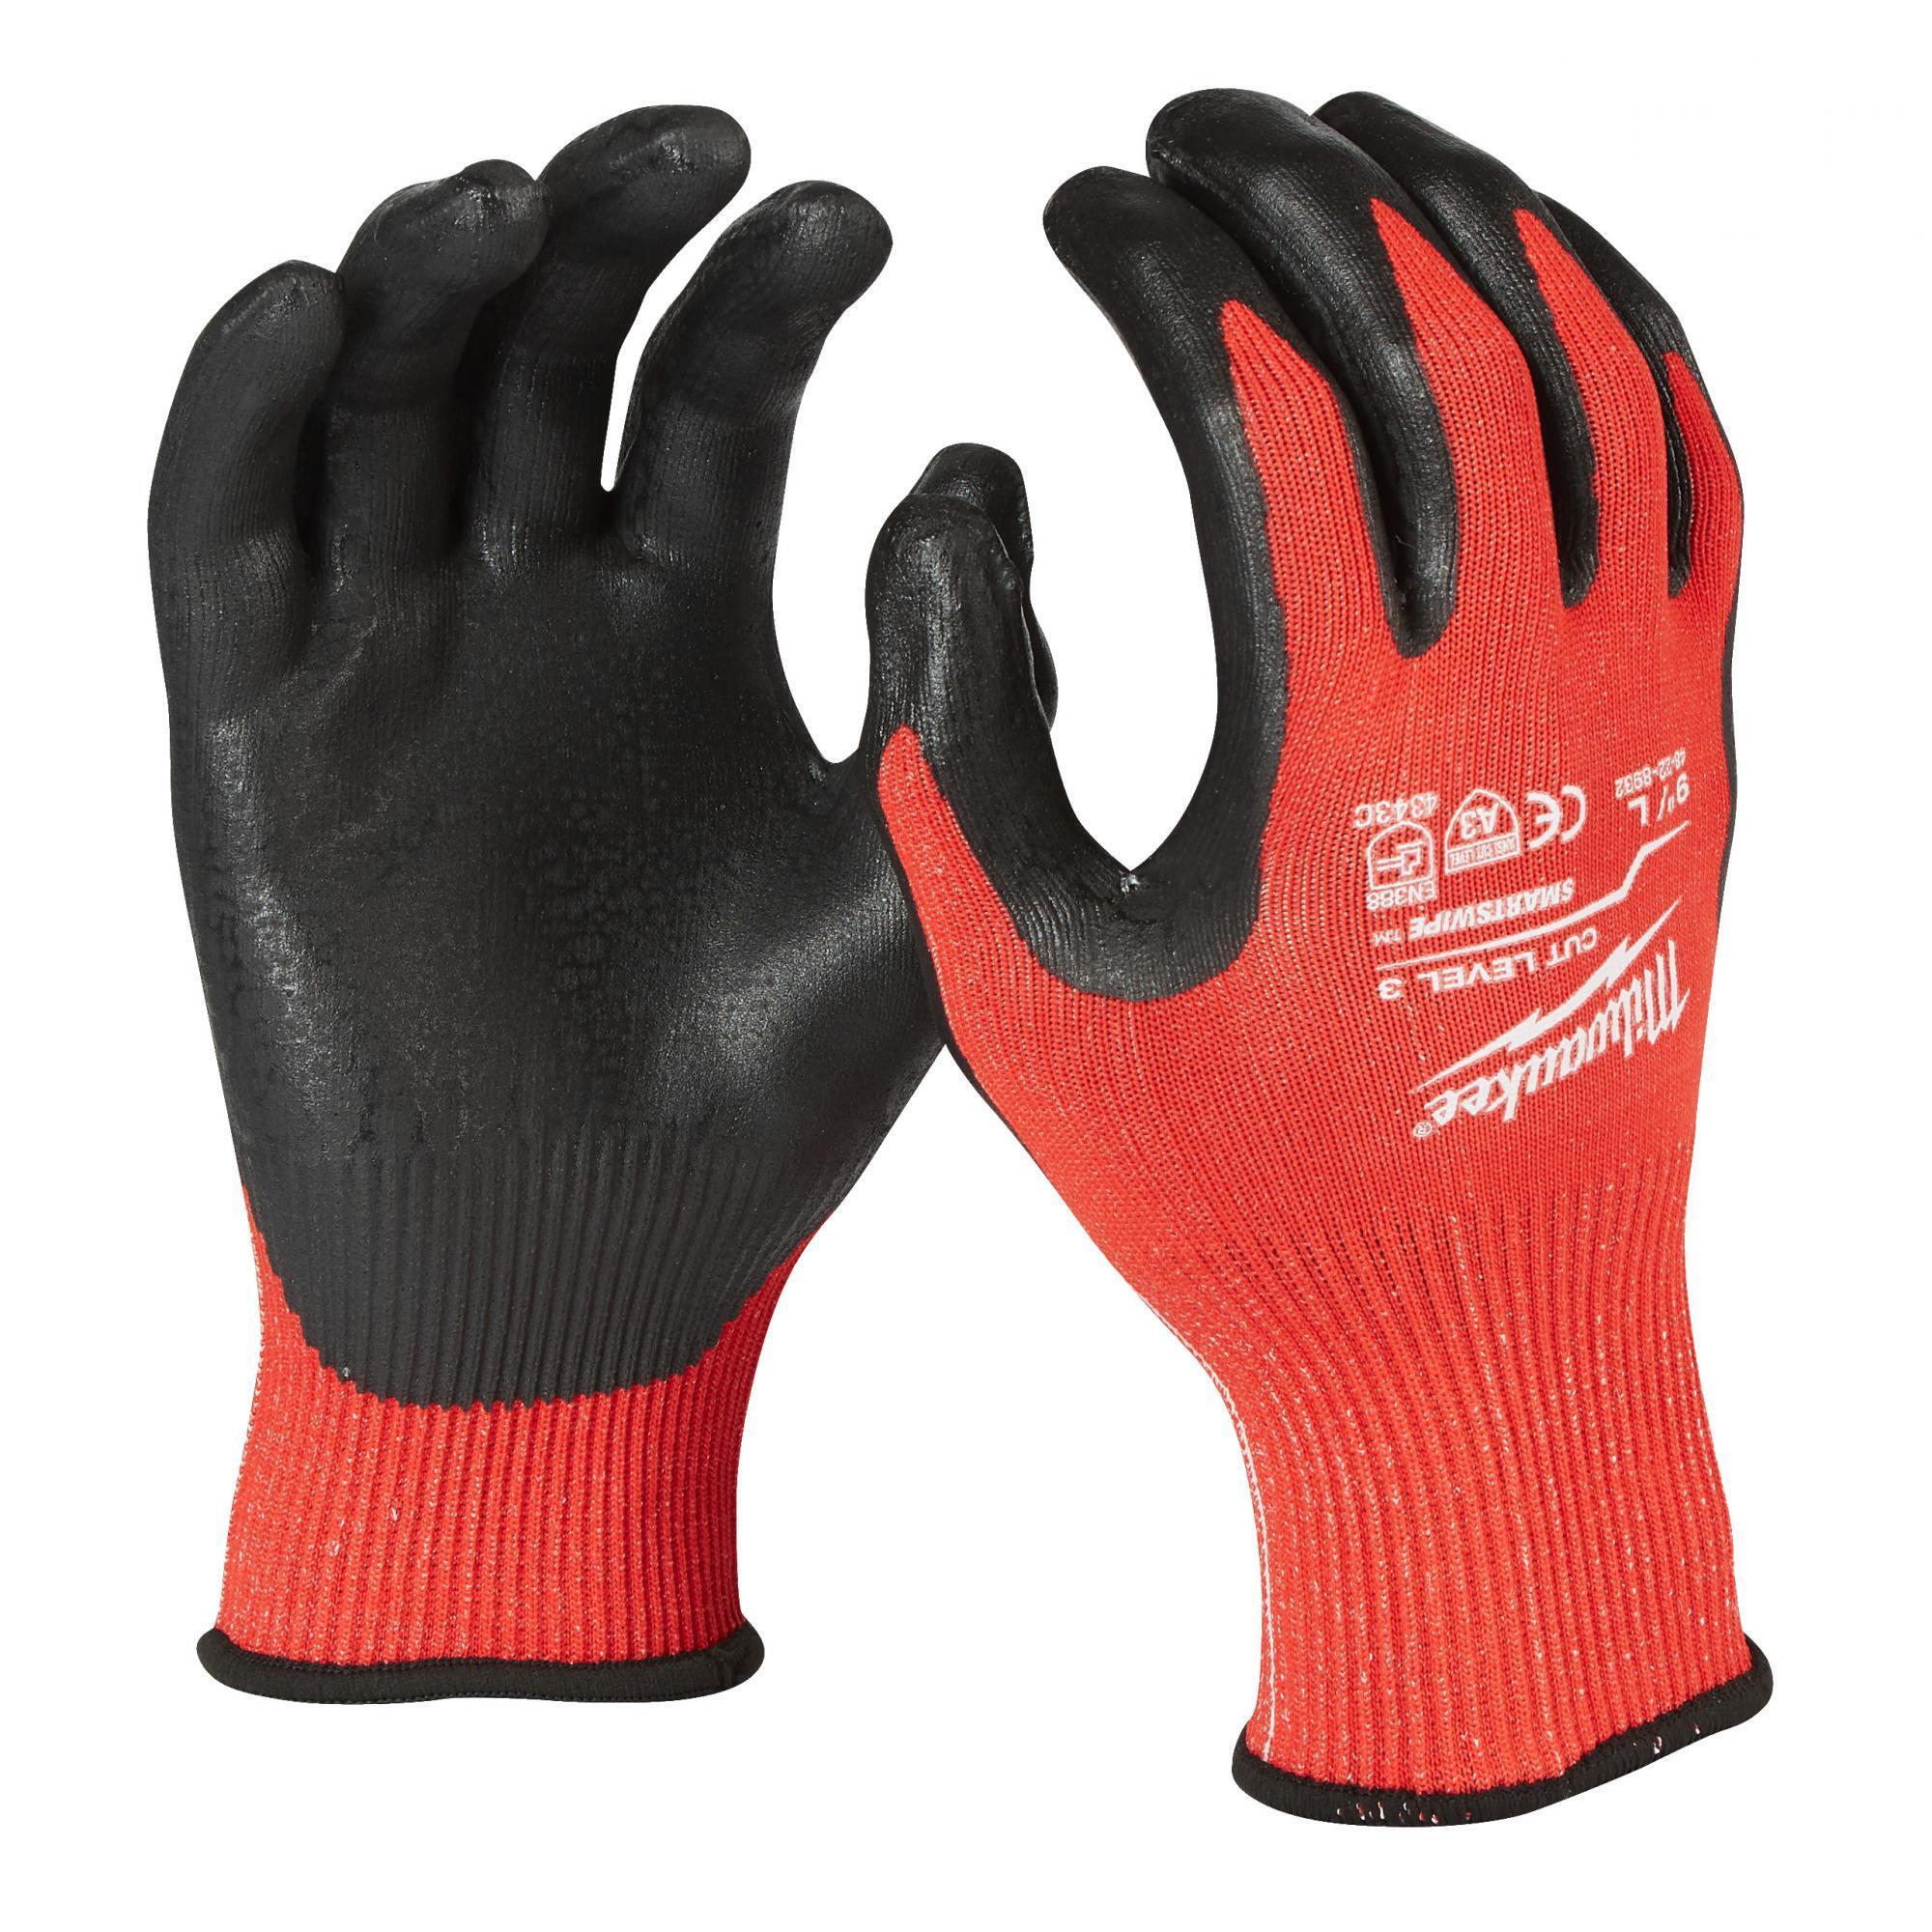 Перчатки защитные Milwaukee Cut Level 3/C, размер L/9, 4932471619, 1 пара защитные улучшенные перчатки s gloves